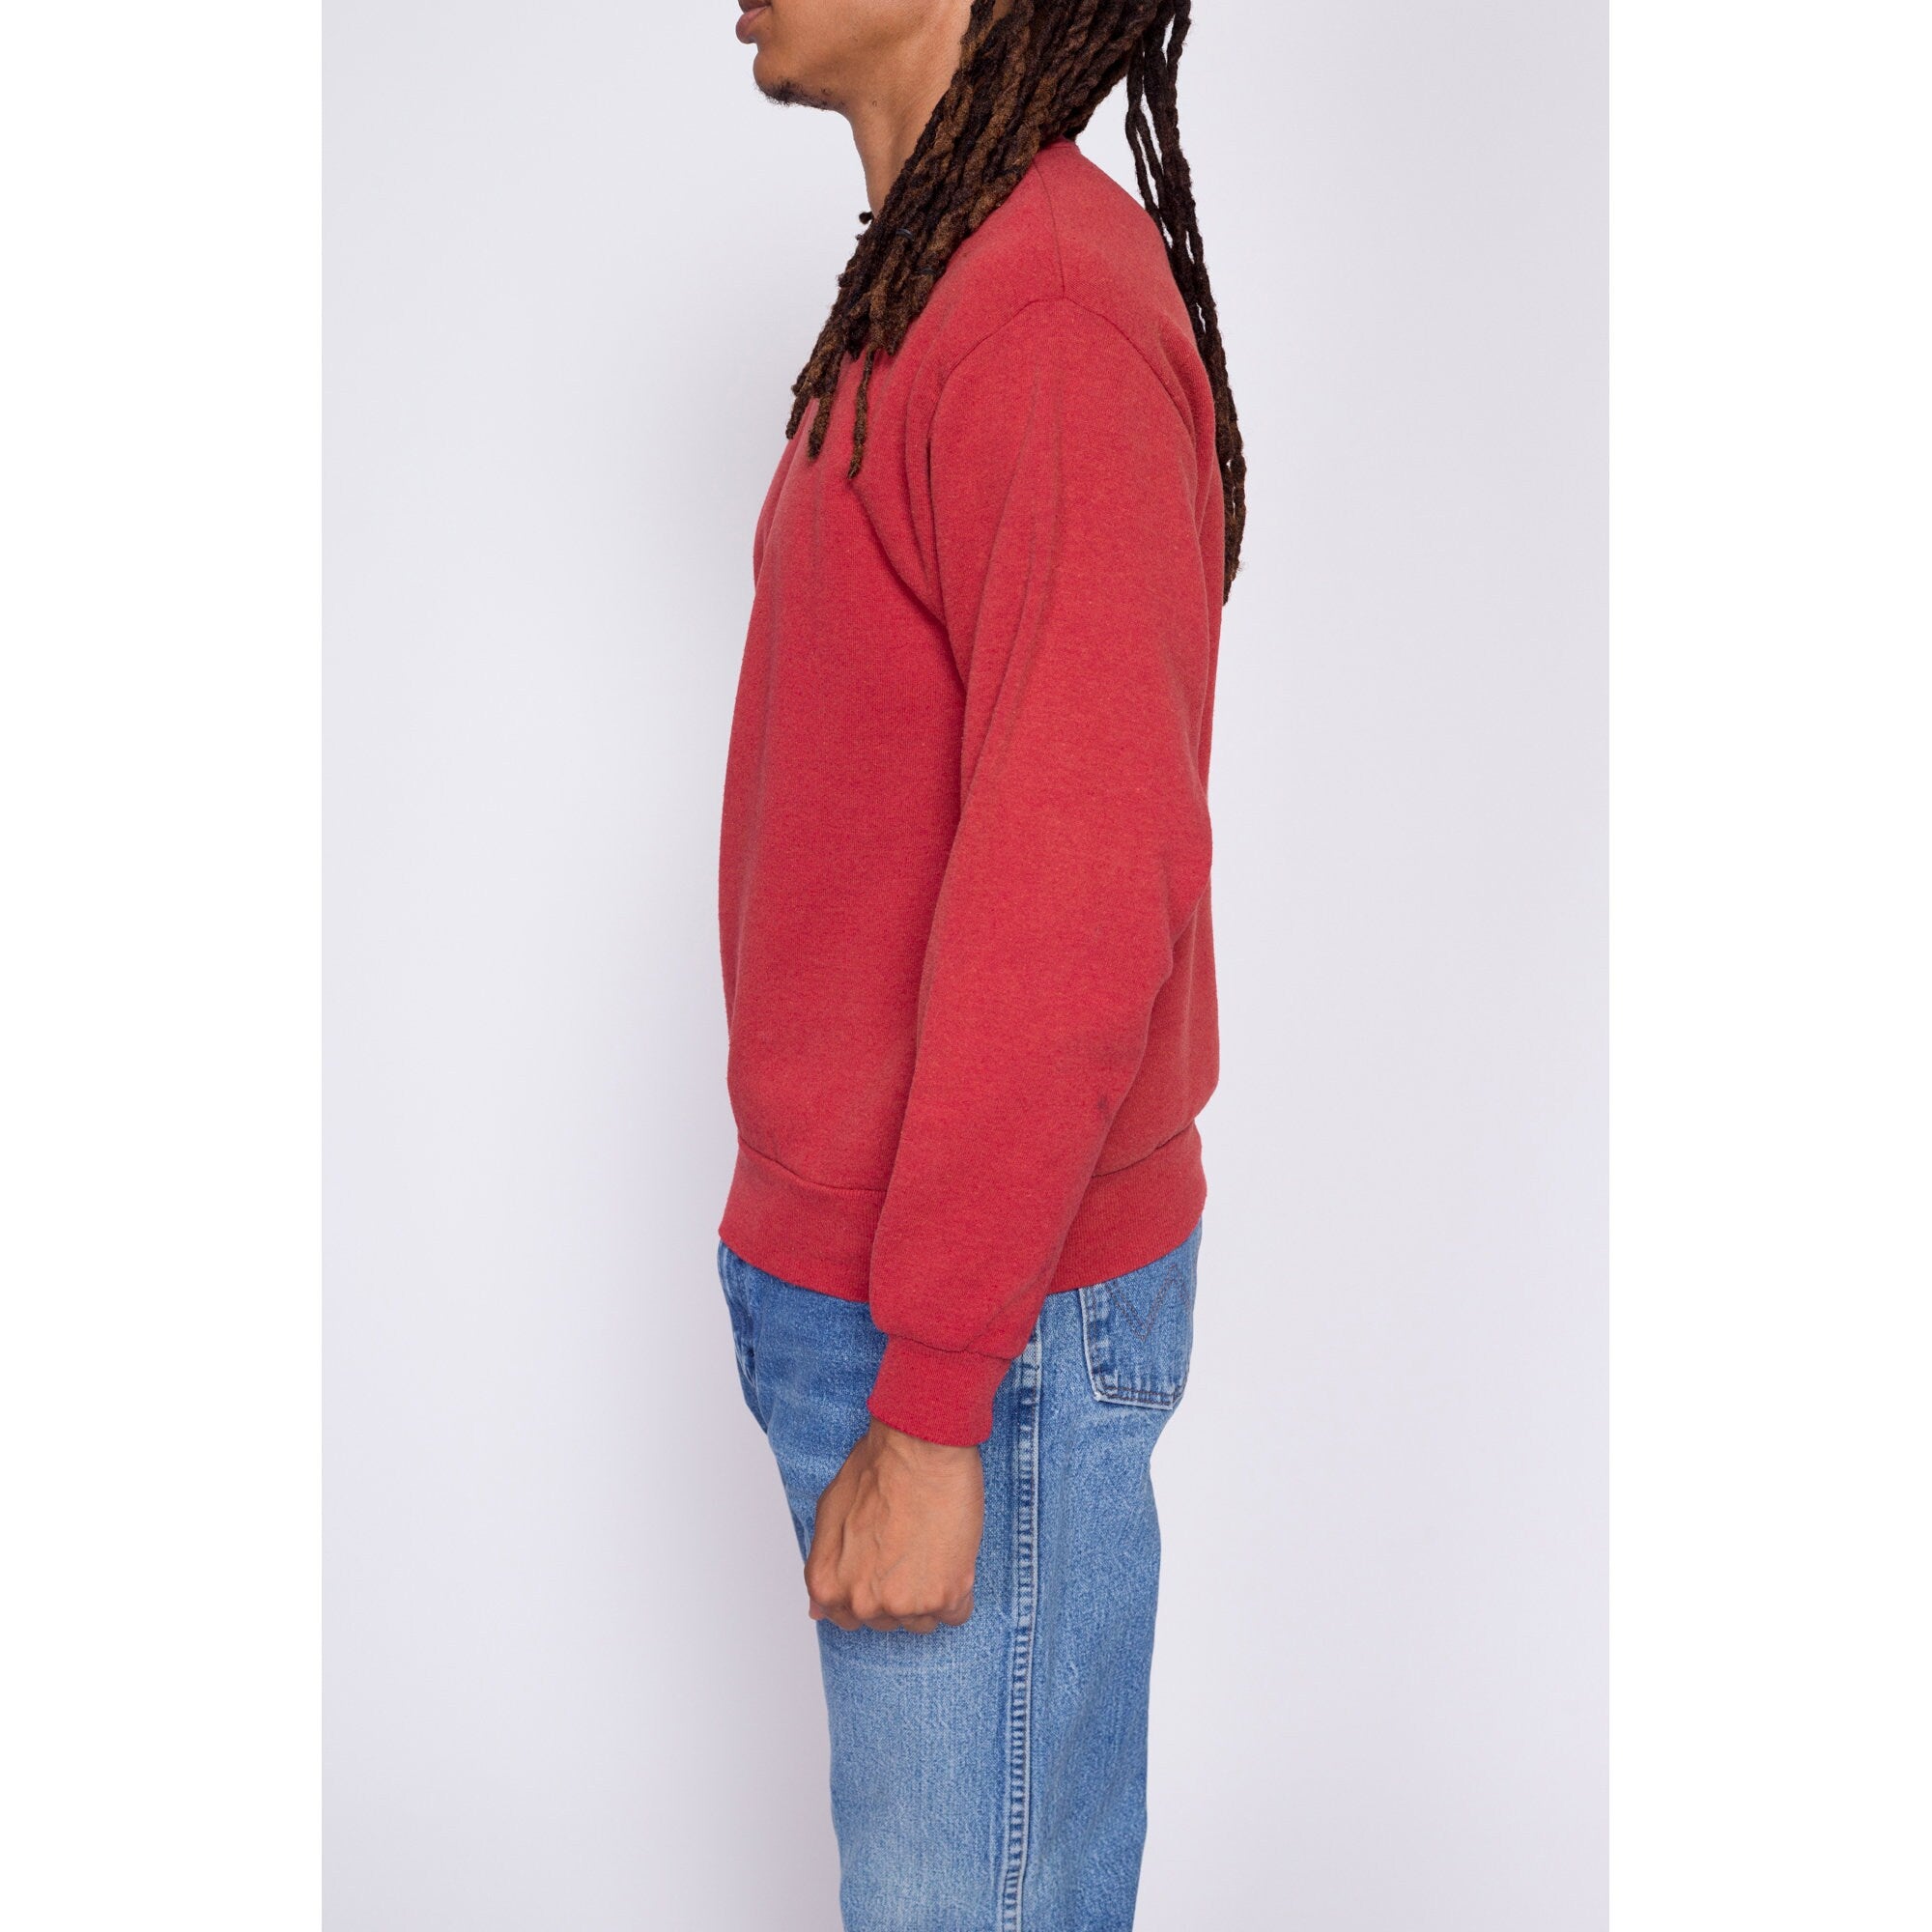 90s Faded Red Crewneck Sweatshirt - Men's Medium – Flying Apple